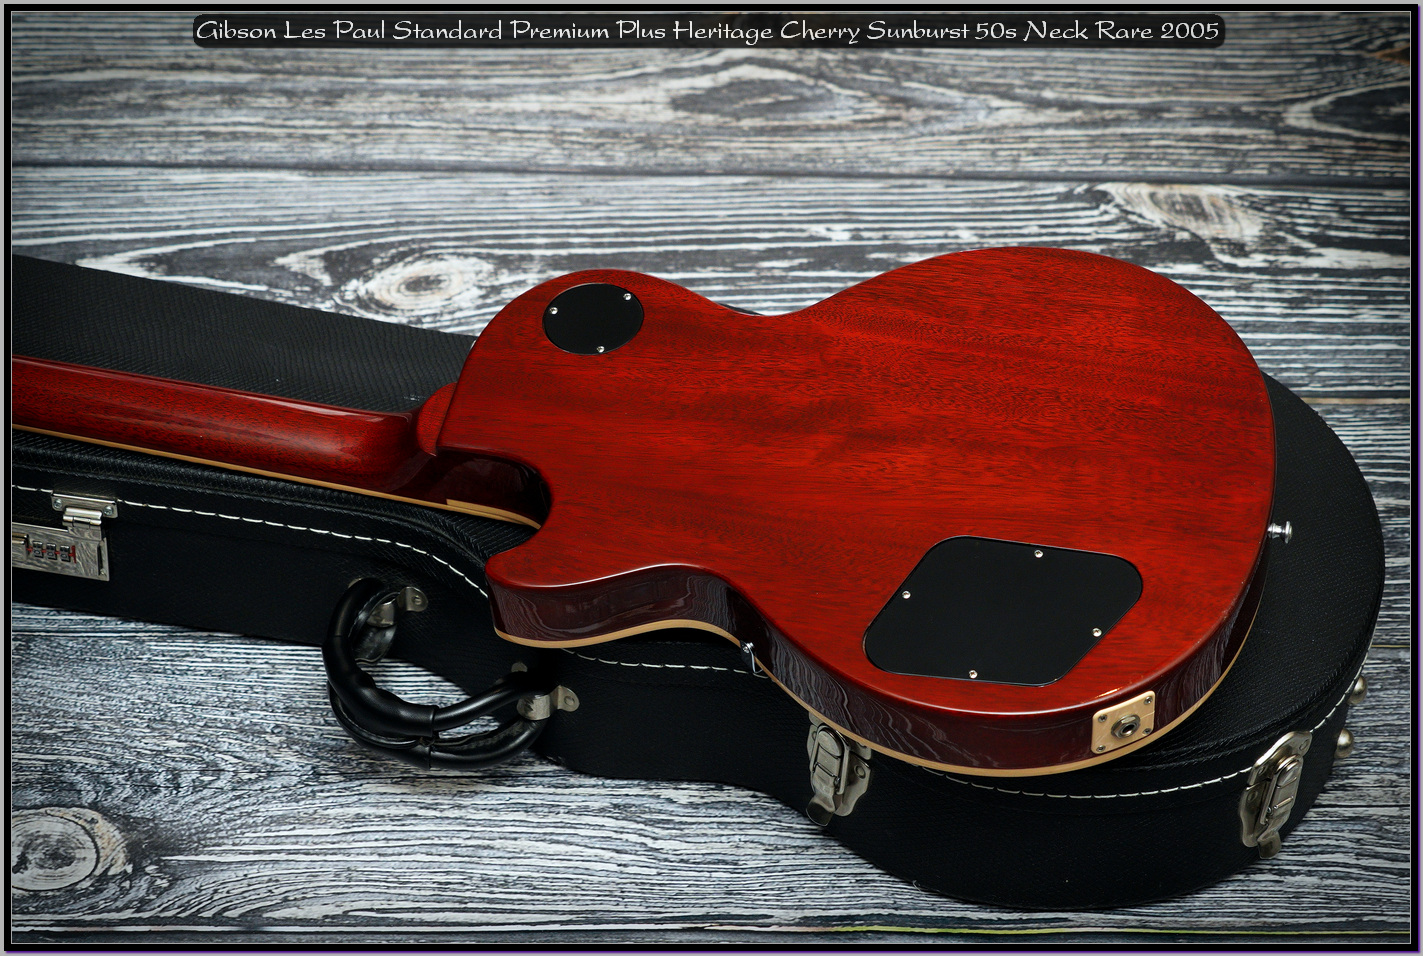 Gibson Les Paul Standard Premium Plus Heritage Cherry Sunburst 50s Neck Rare 2005 11_x1440.jpg